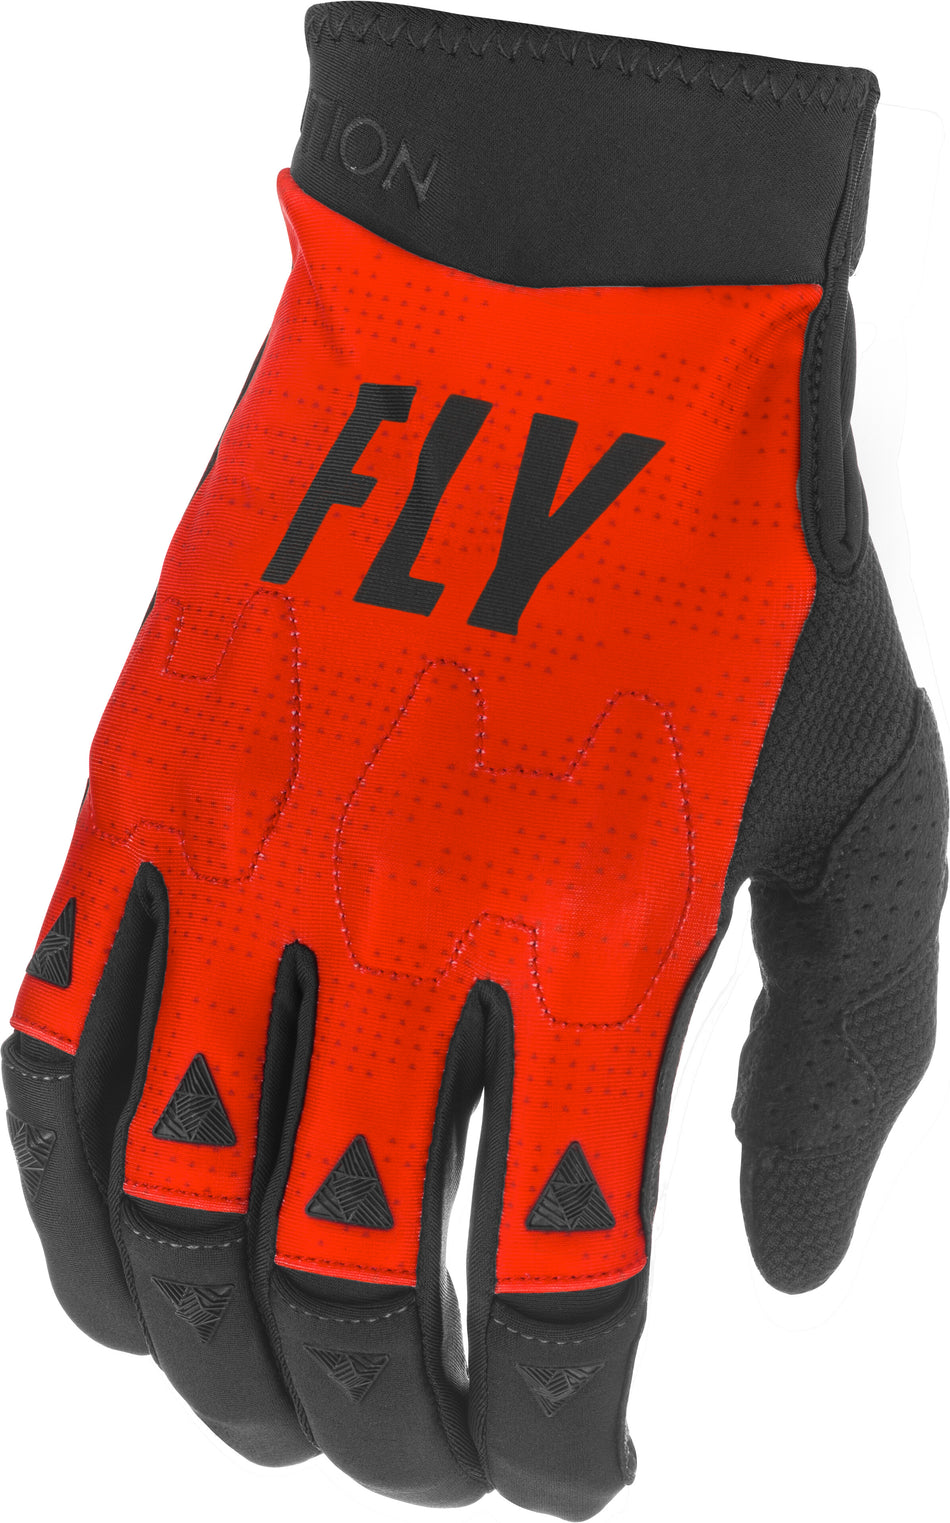 FLY RACING Evolution Dst Gloves Red/Black/White Sz 13 374-11213